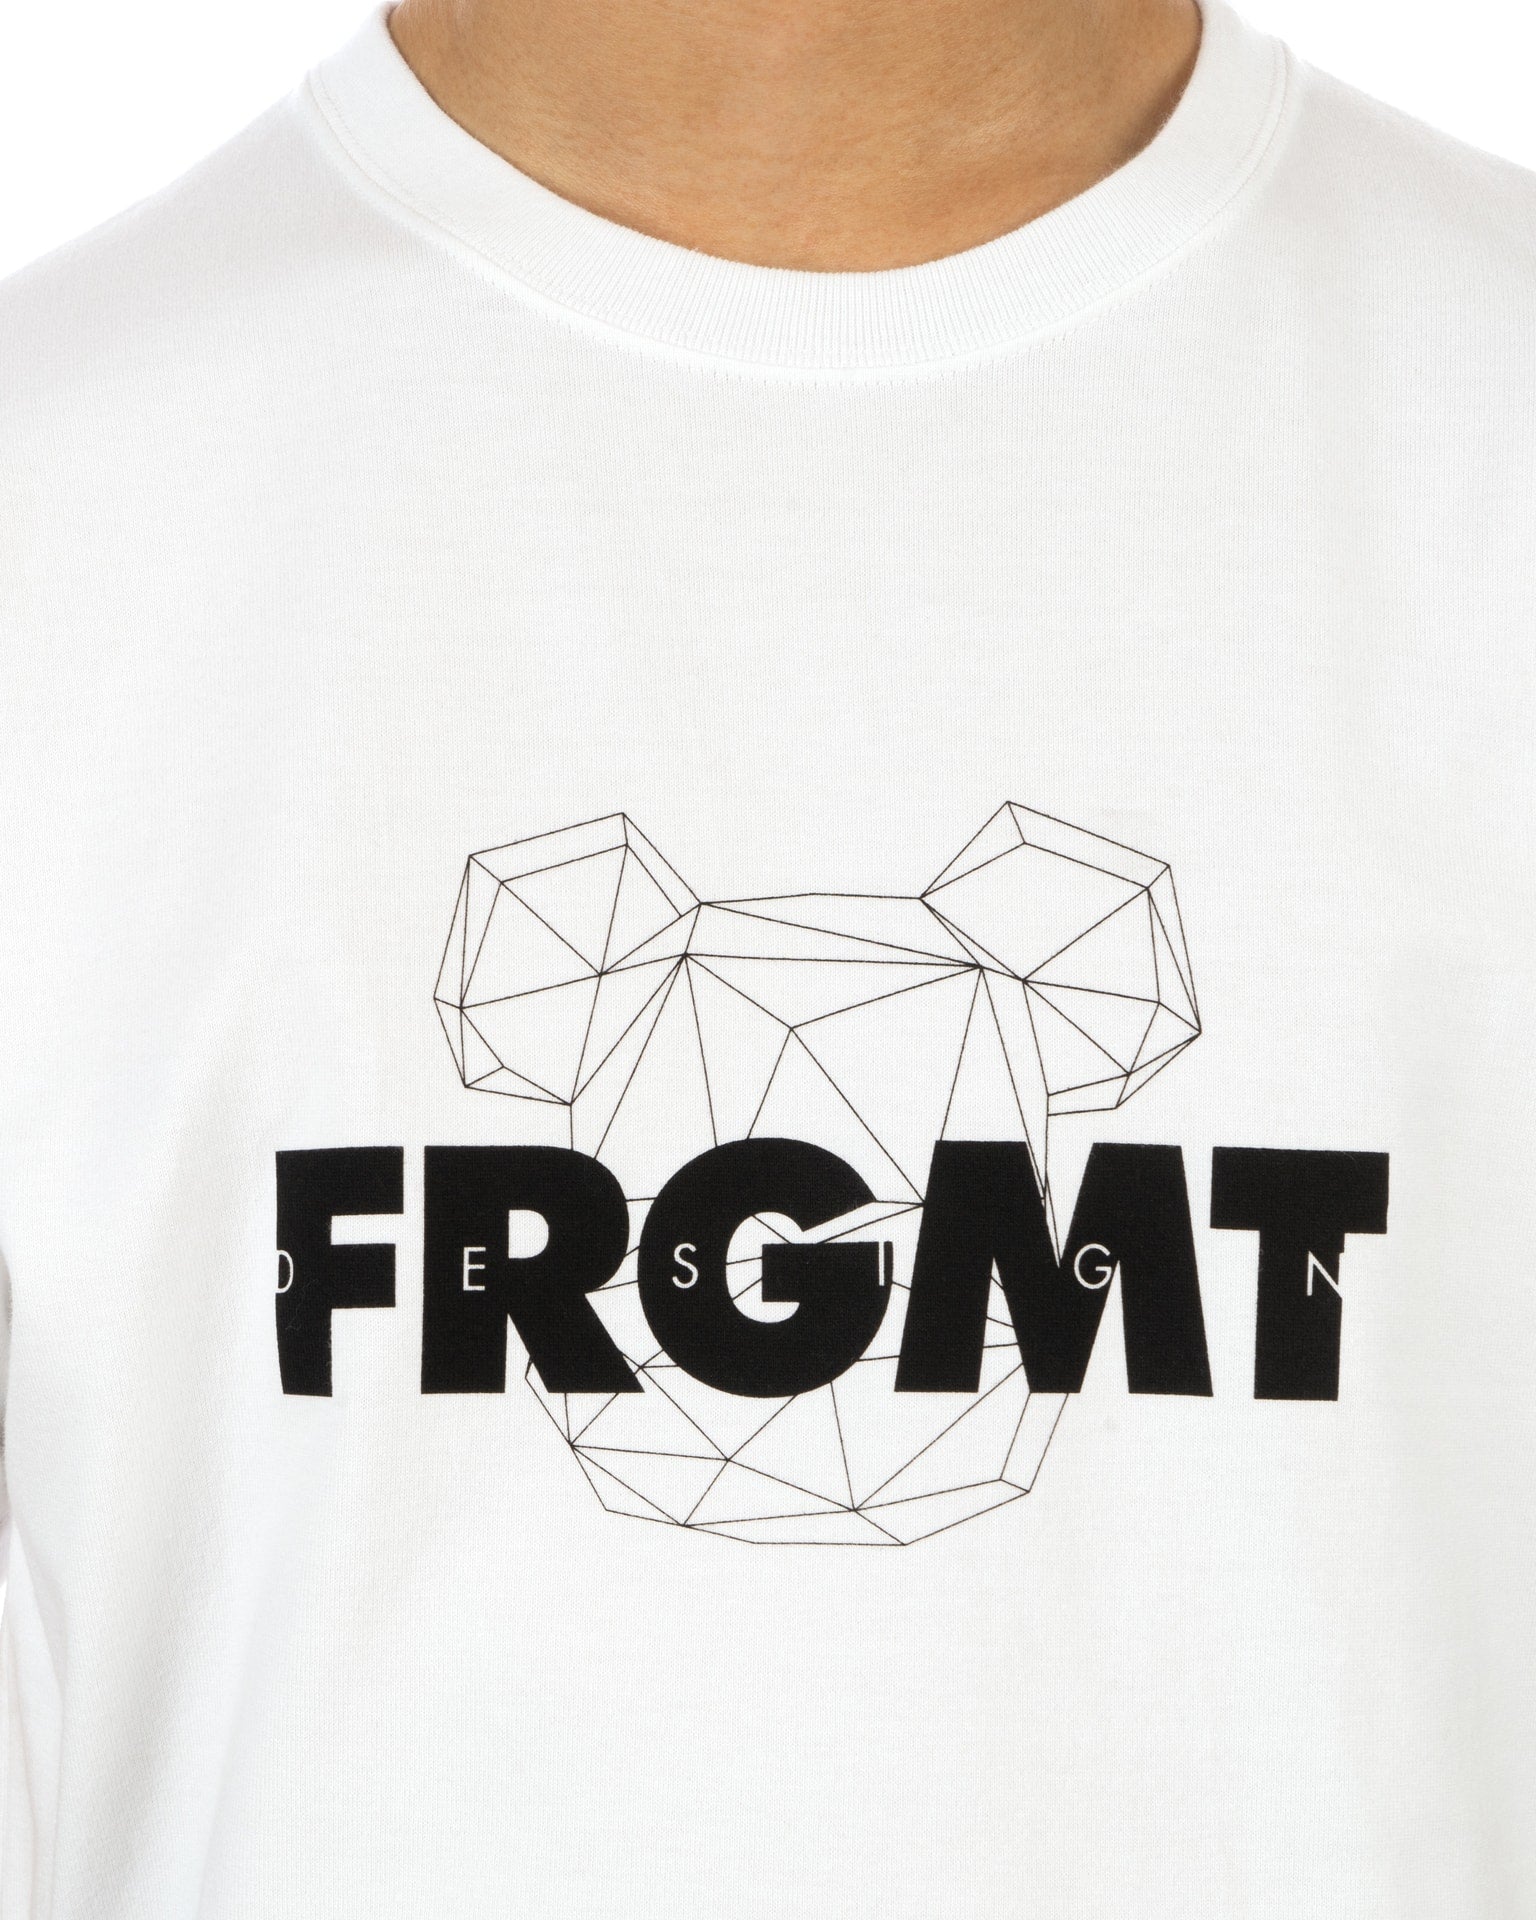 BE@RTEE fragmentdesign 2020 FRGMT